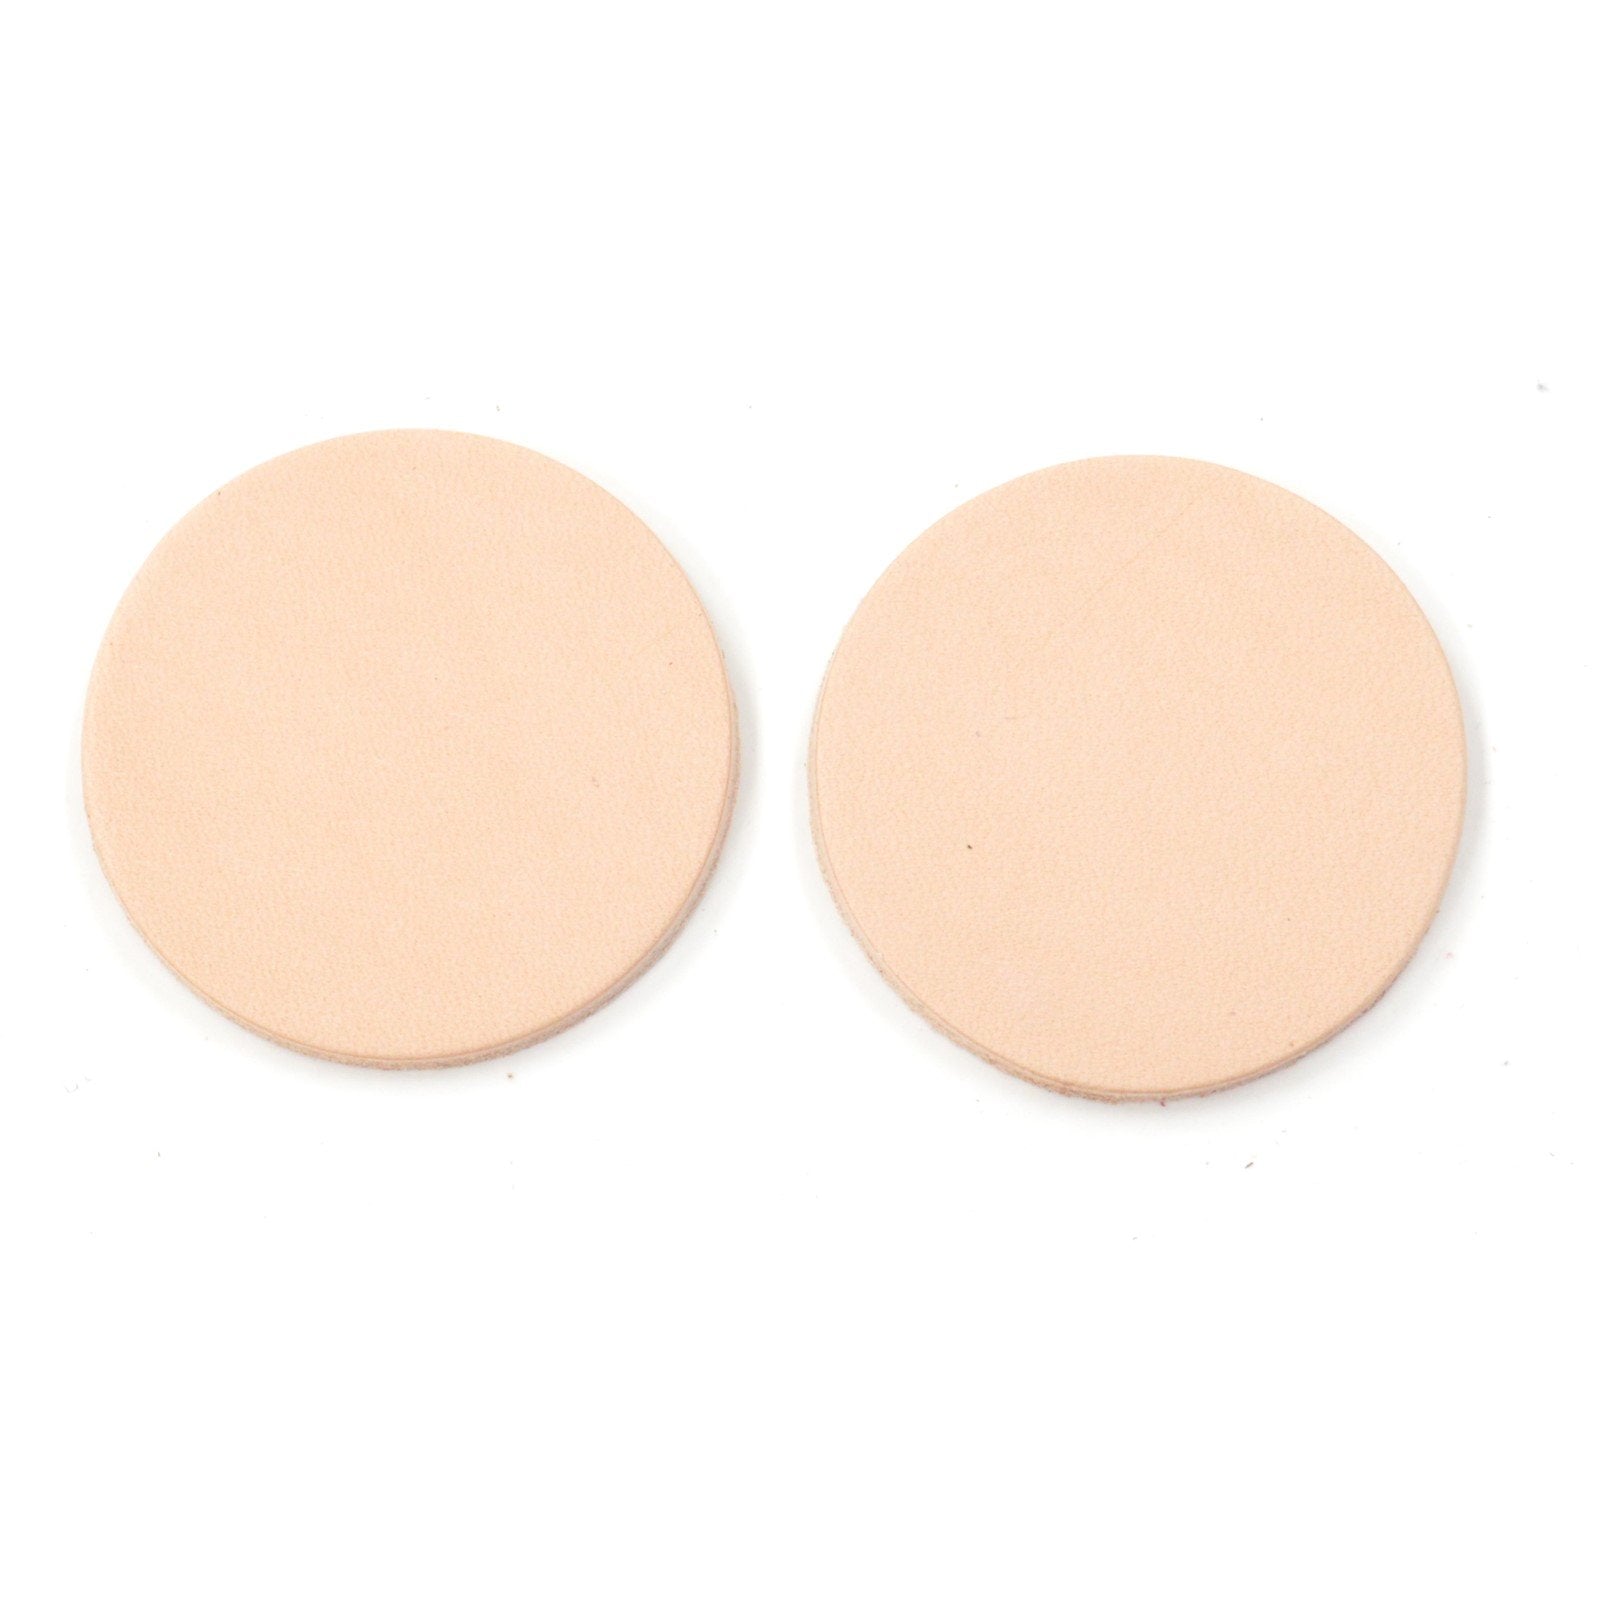 Artisan's Choice Veg Tan Die Cut Circle Earrings, Medium Circle / 5-6 oz / Small Pack - 4 Pairs / 8 Pieces | The Leather Guy